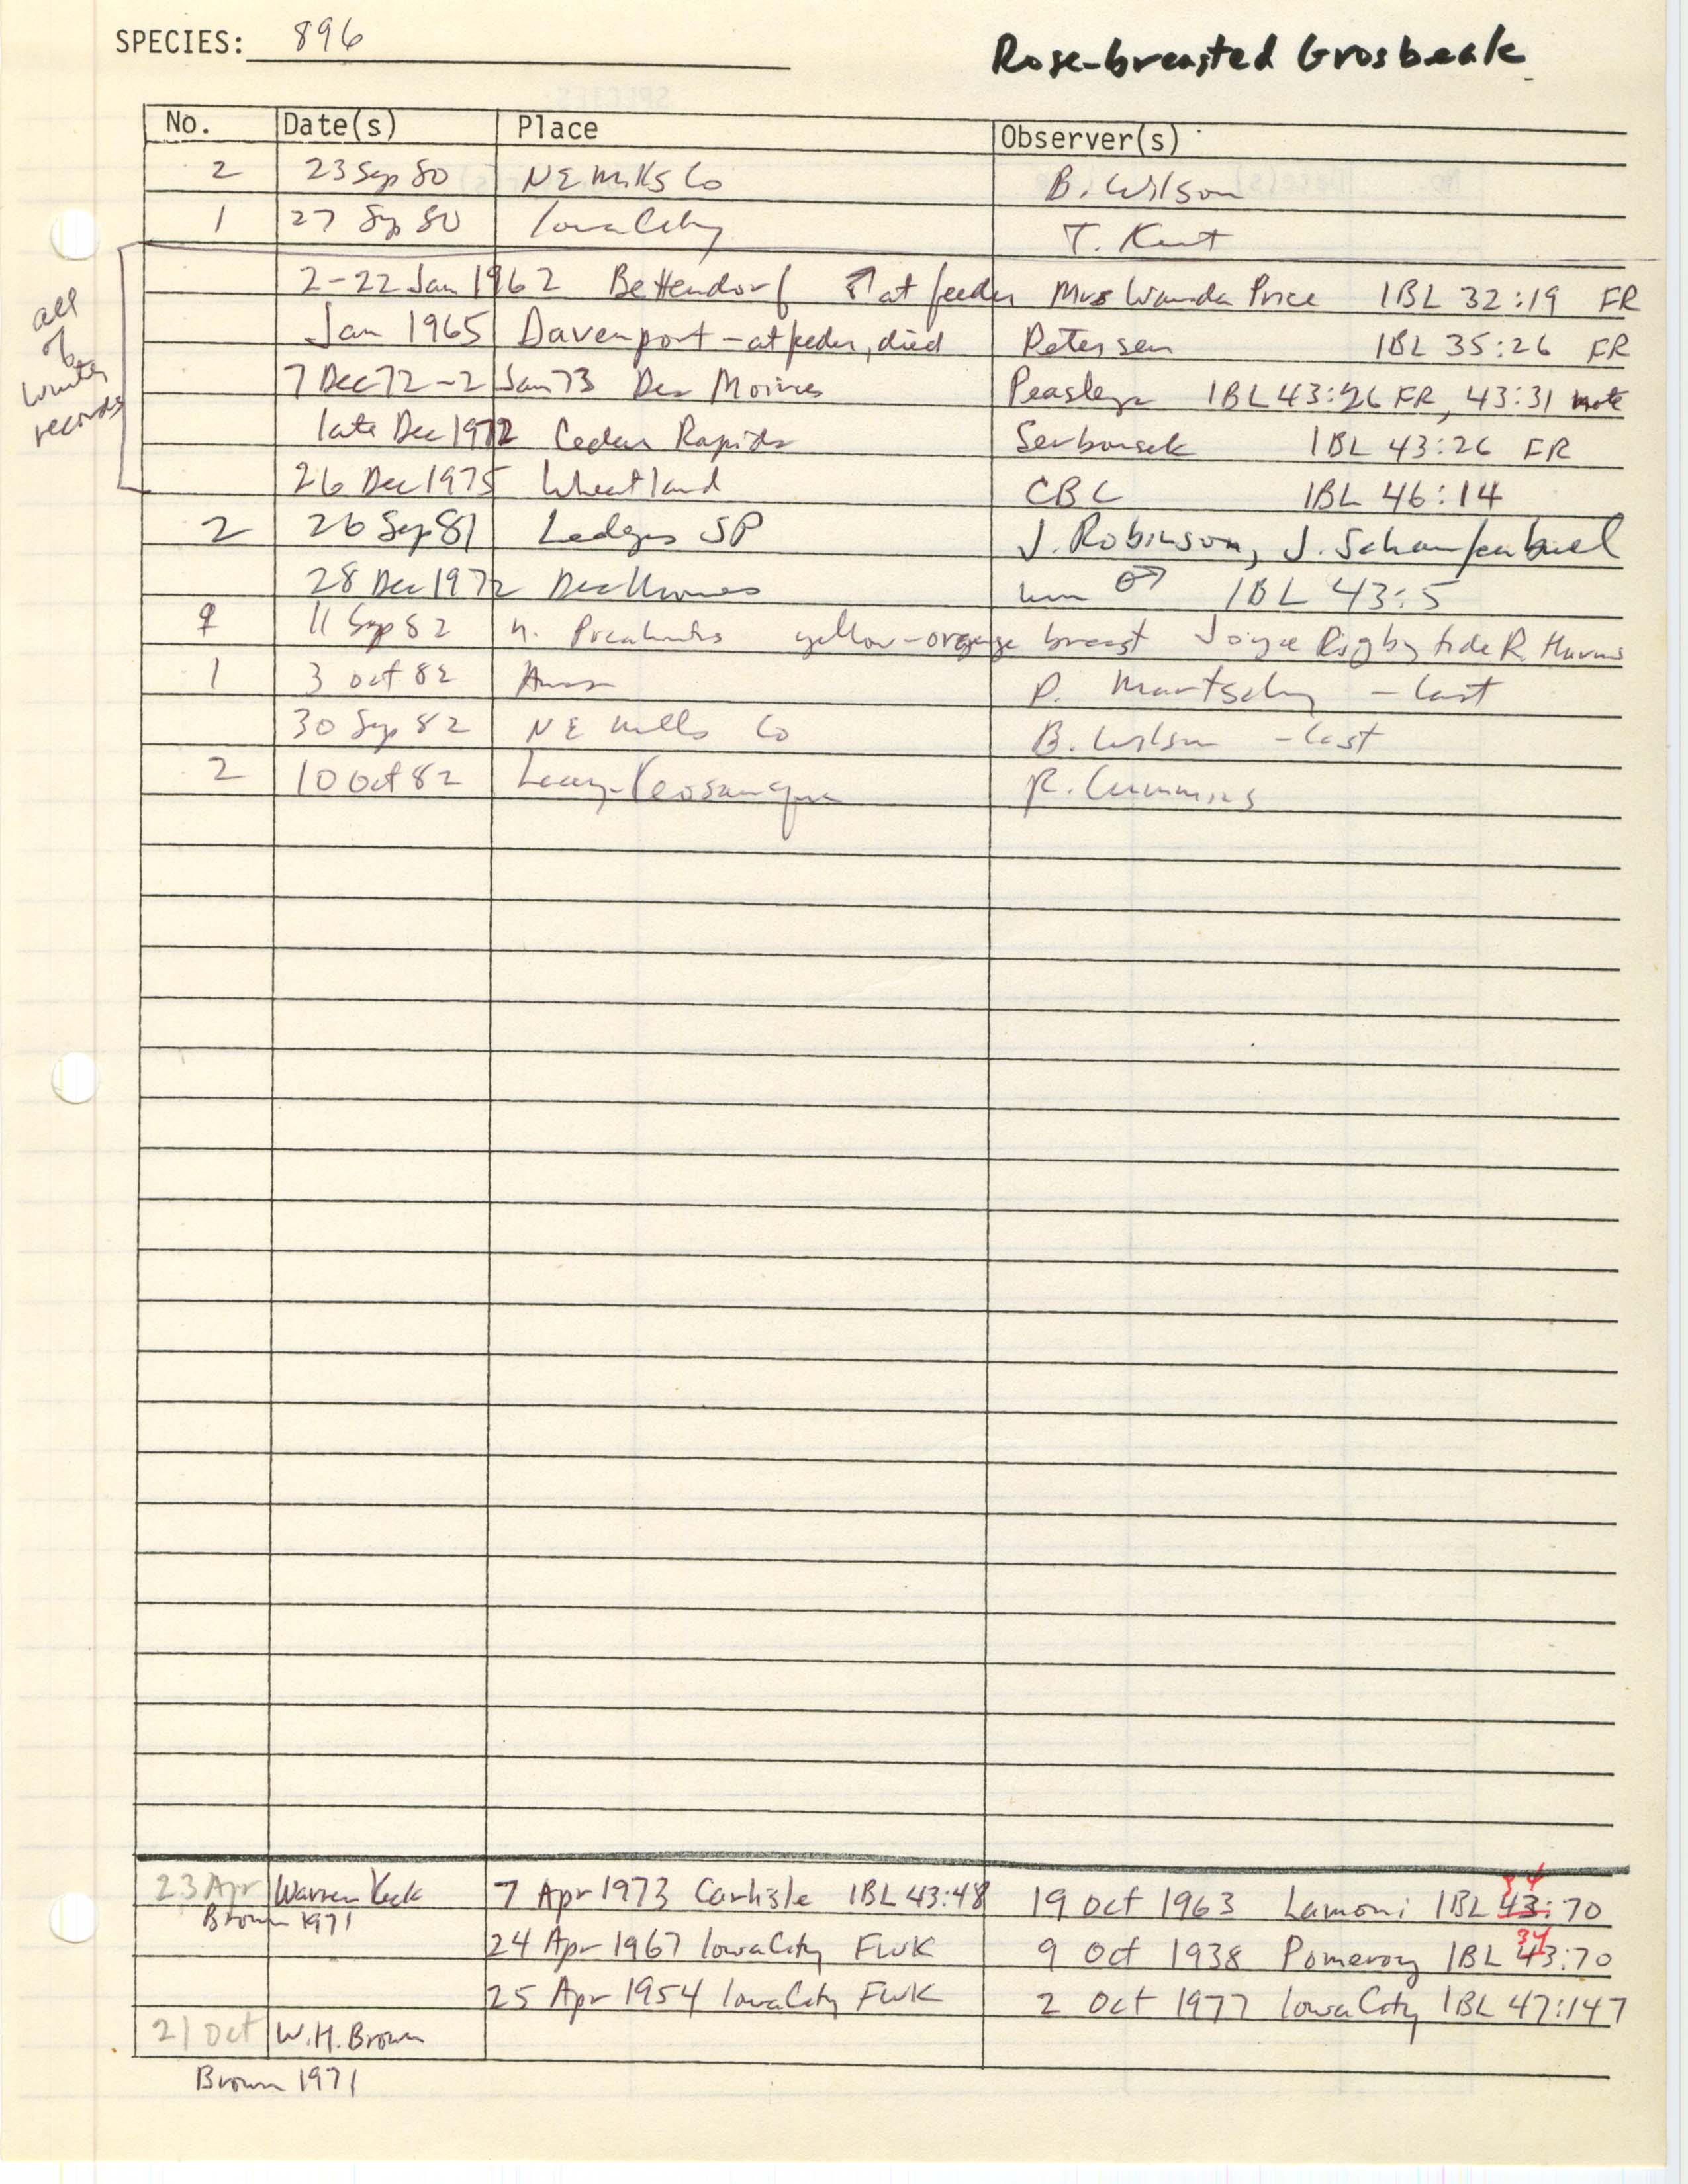 Iowa Ornithologists' Union, field report compiled data, Rose-breasted Grosbeak, 1938-1982